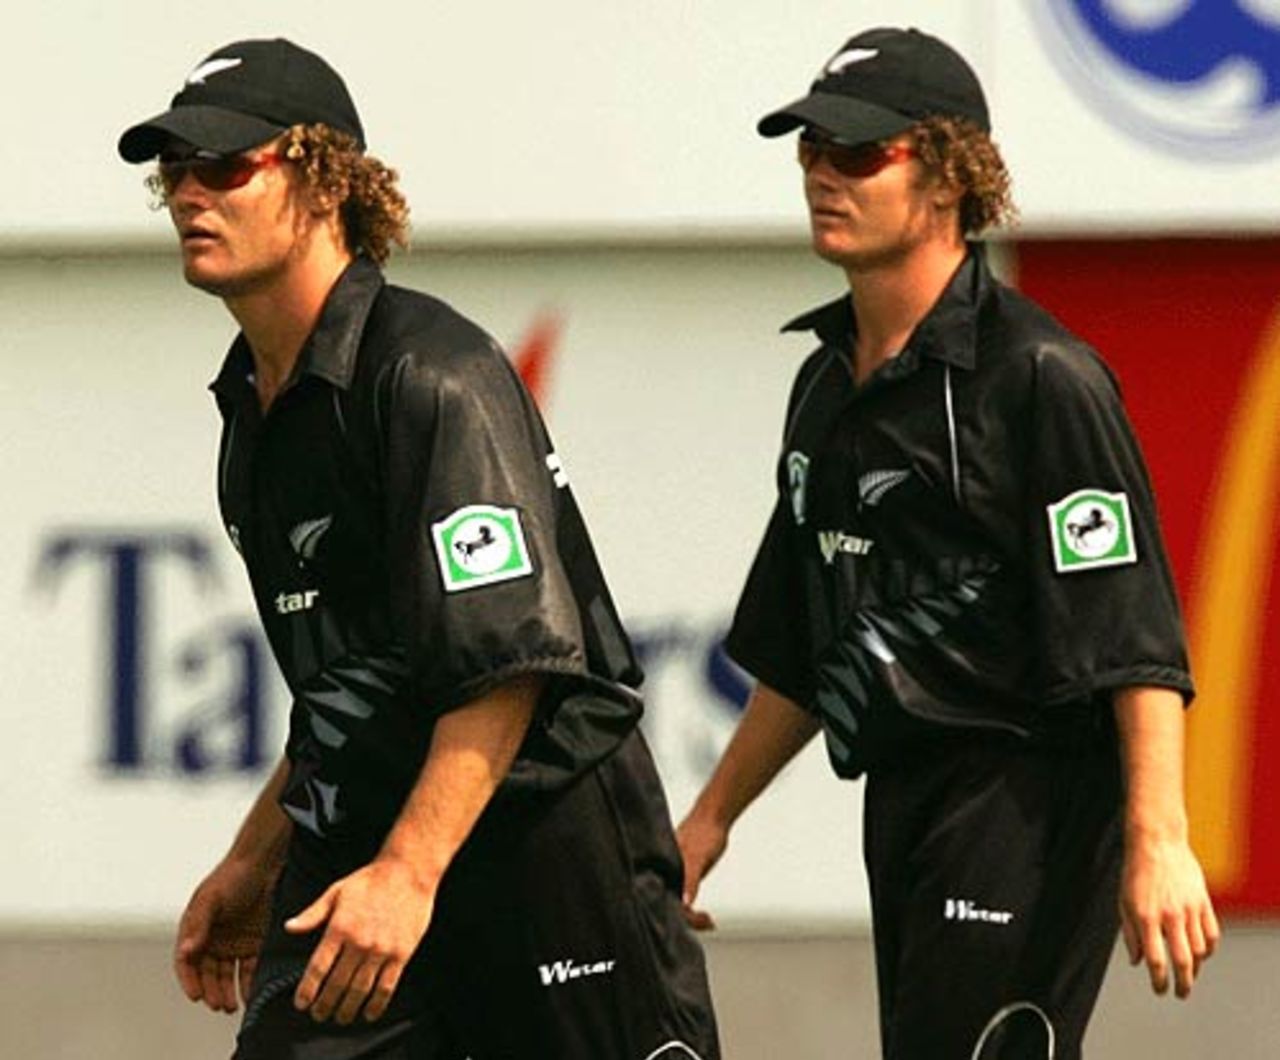 Twins Hamish and James Marshall side by side, New Zealand v Australia, 2nd ODI, Christchurch, February 22, 2005